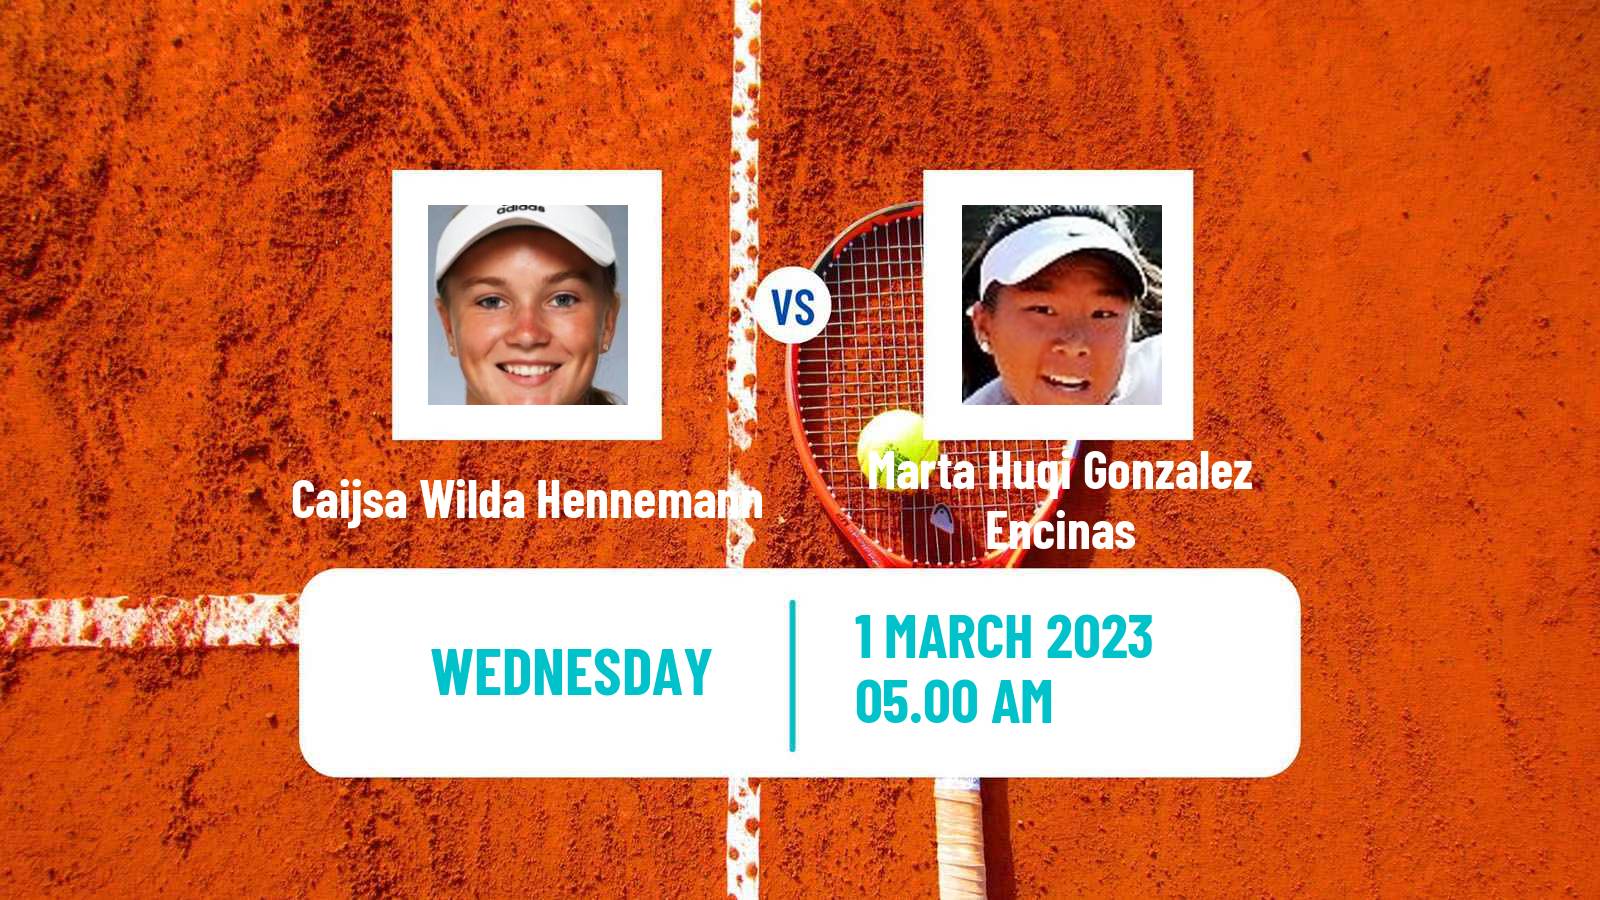 Tennis ITF Tournaments Caijsa Wilda Hennemann - Marta Huqi Gonzalez Encinas